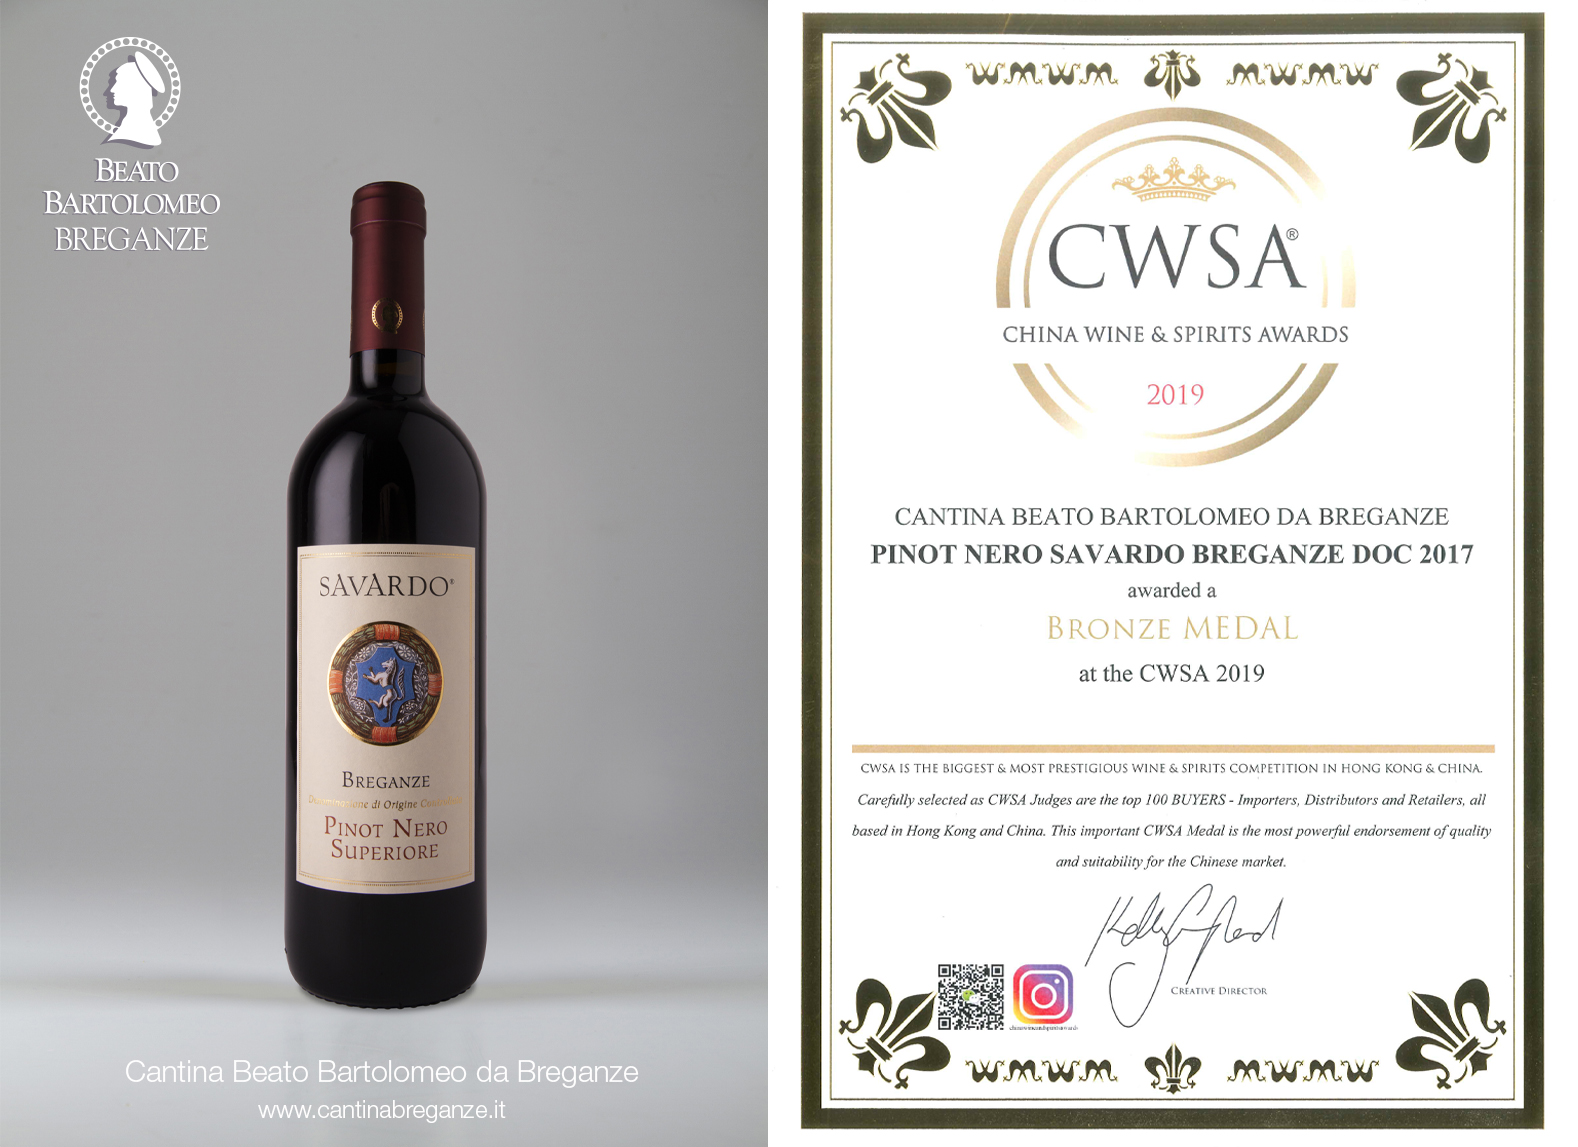 CWSA China Wine & Spirits Awards 2019